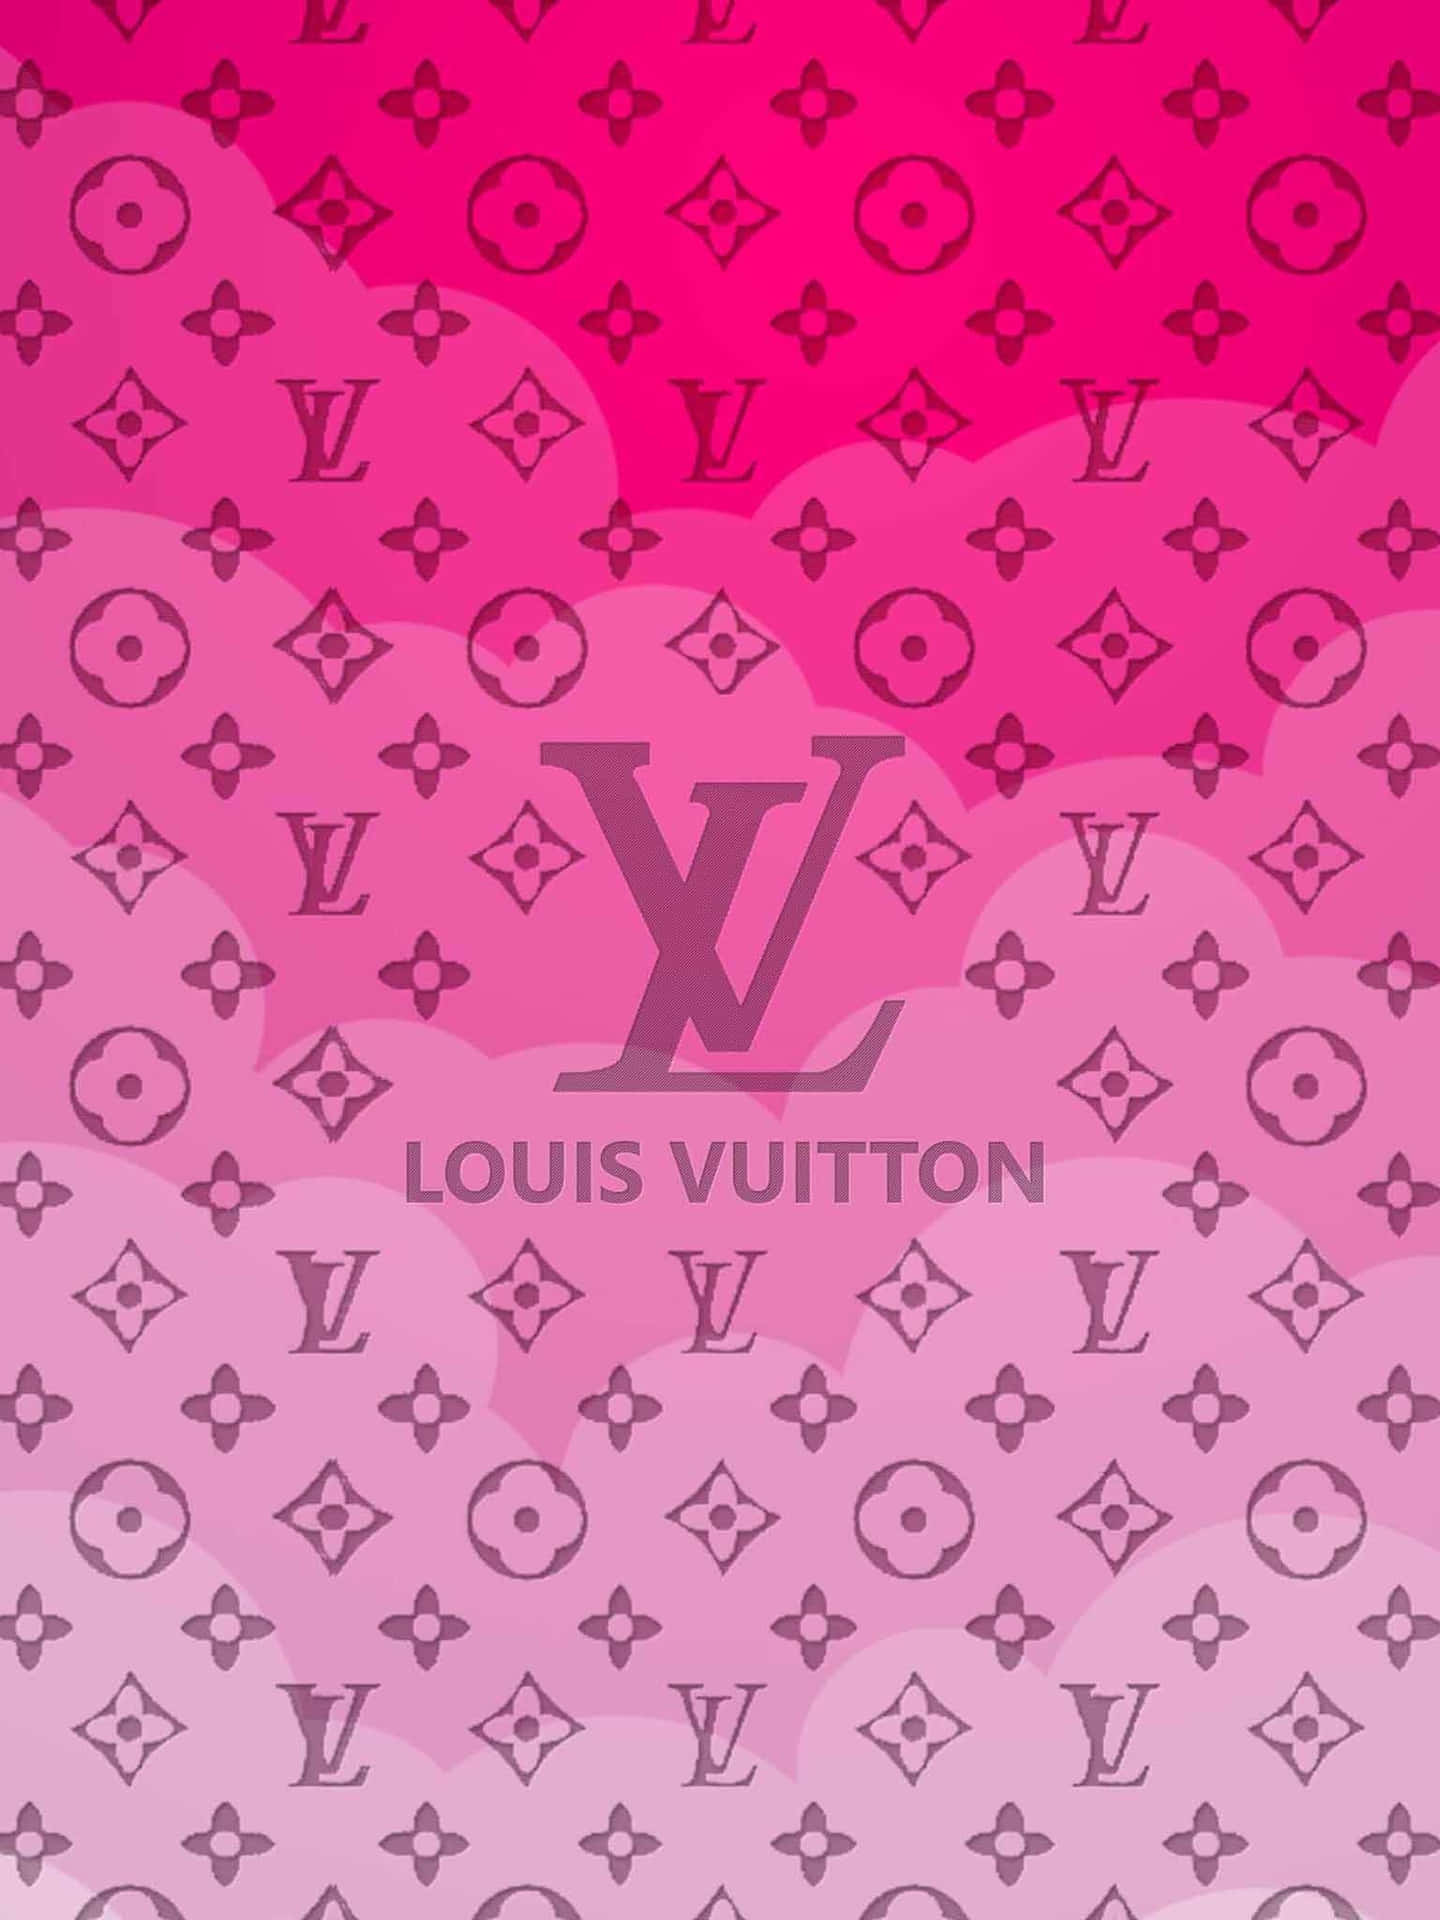 Download Paint Drip Louis Vuitton Pink Wallpaper